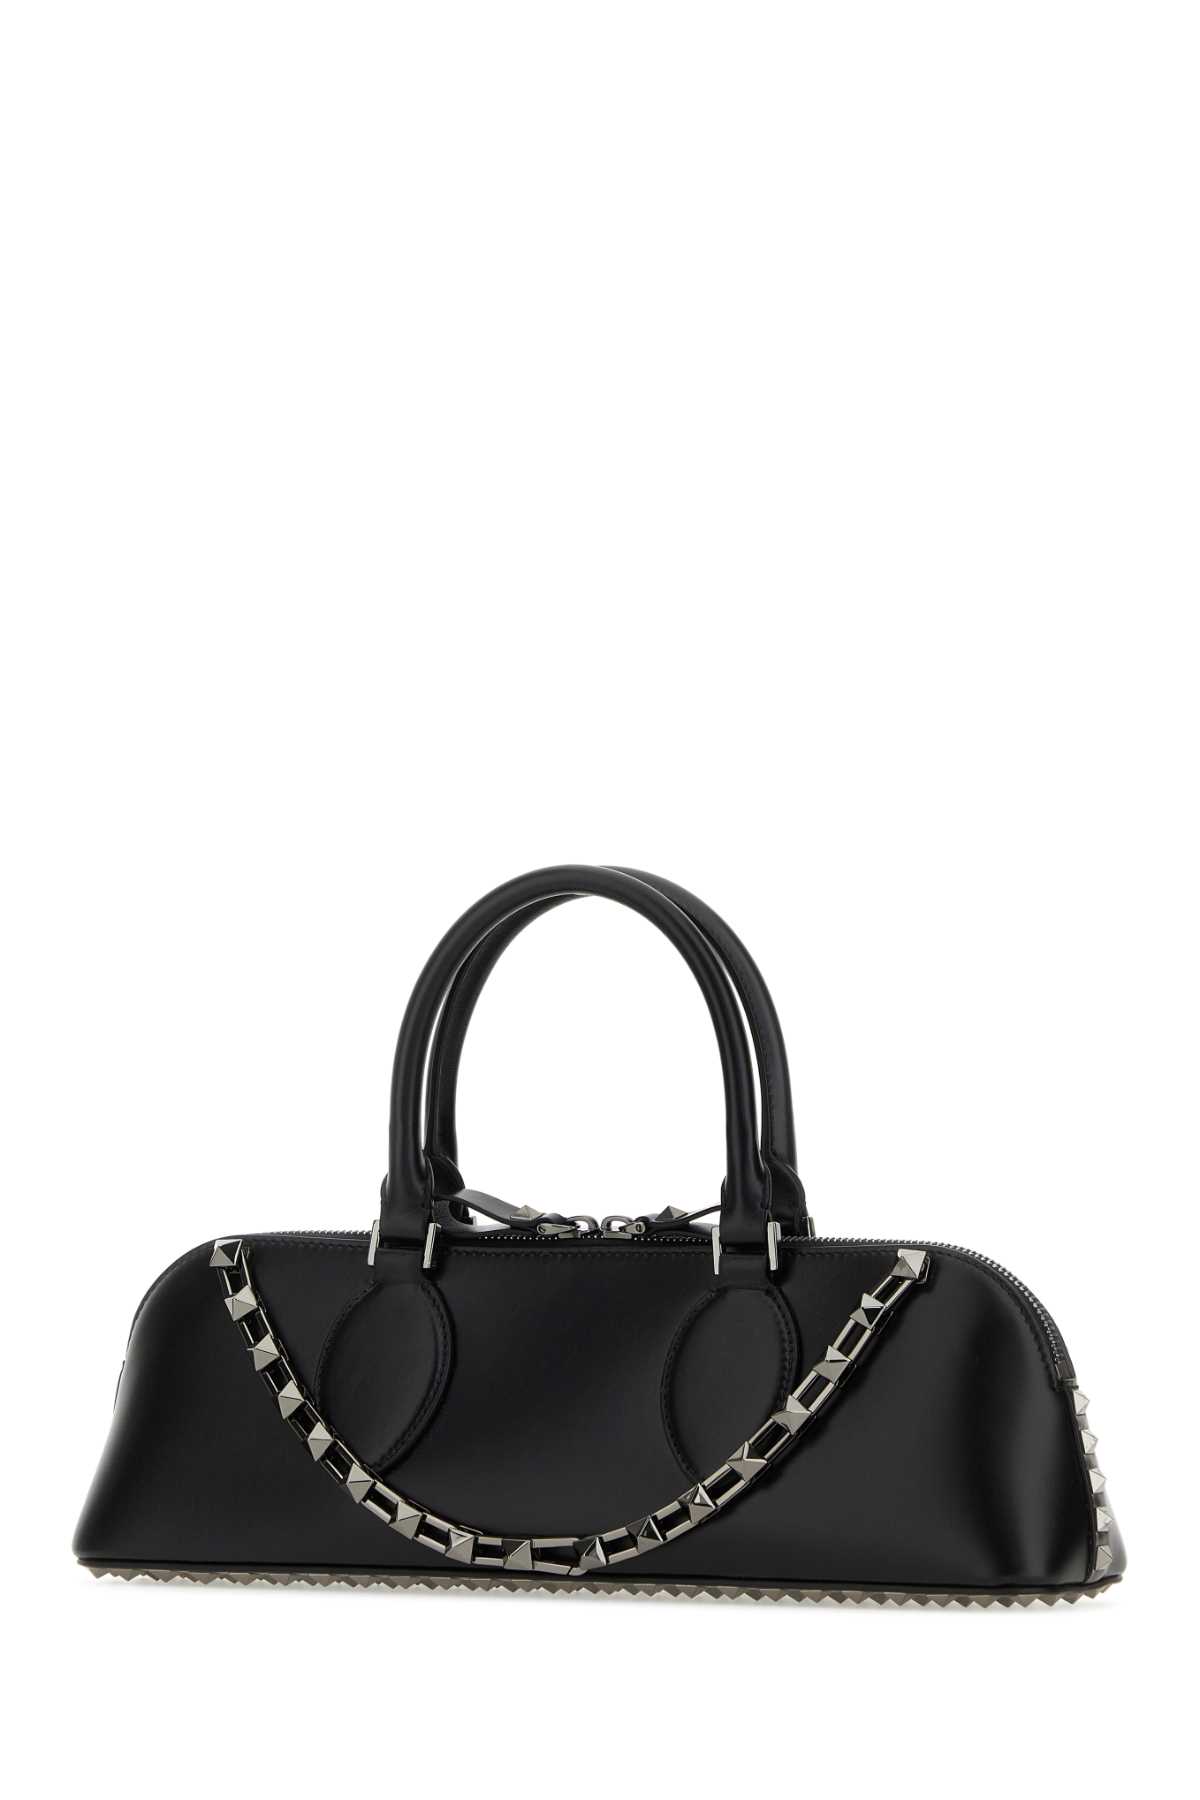 Valentino Garavani Black Leather Rockstud East-west Handbag In Nero